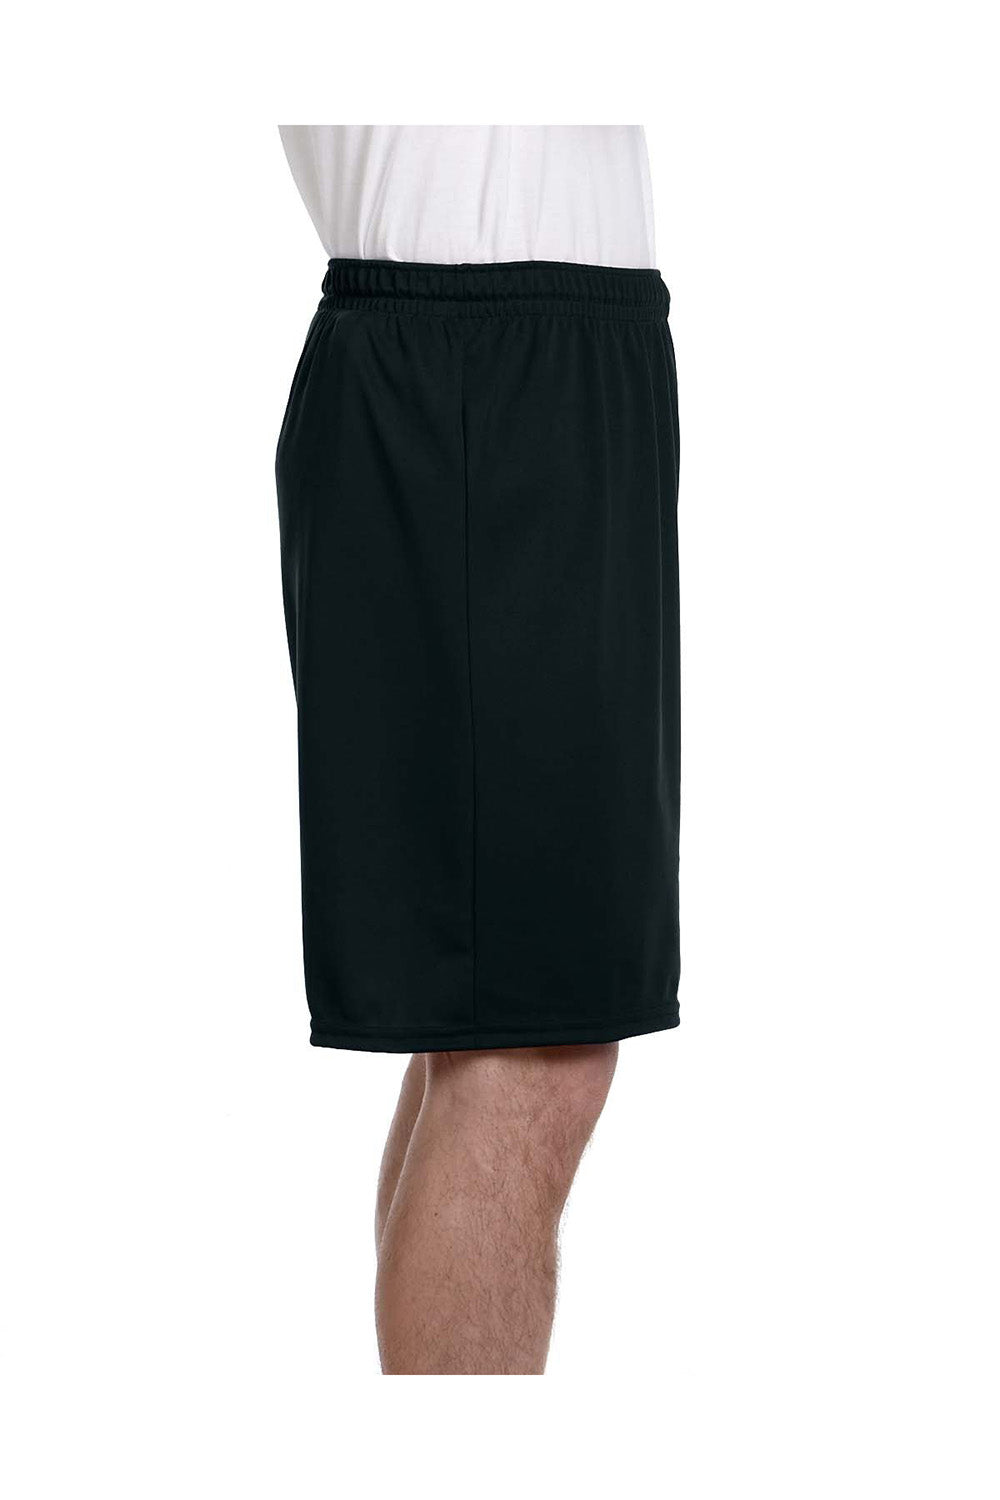 Augusta Sportswear 1420 Mens Training Shorts Black Model Side